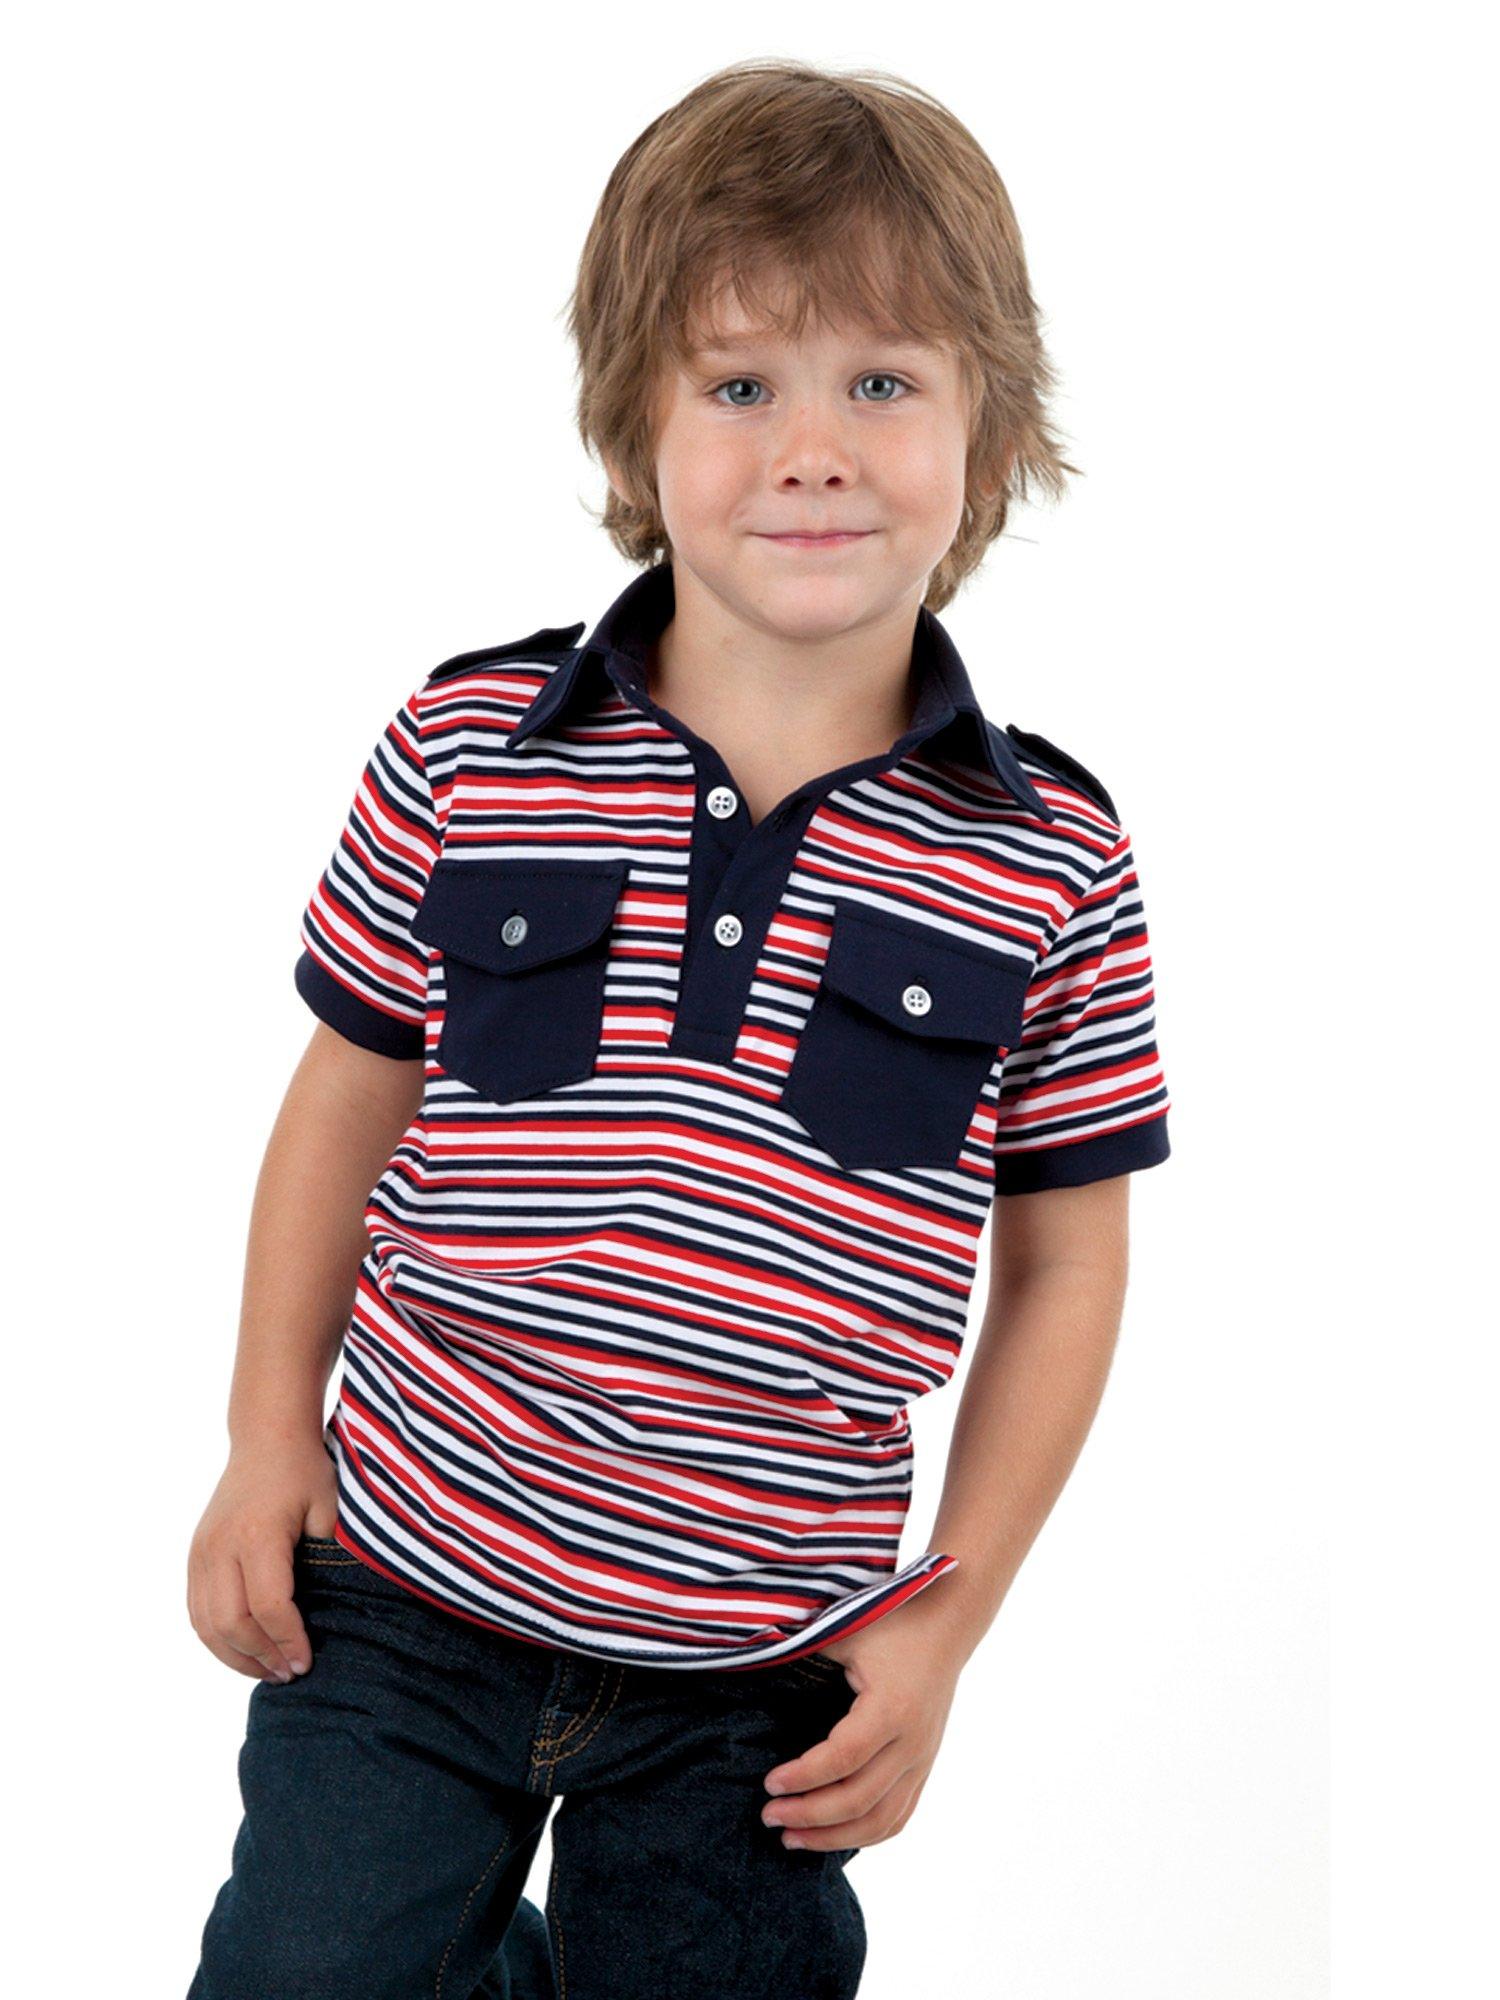 Jalie 3137 - Polo Shirt Pattern for Boys